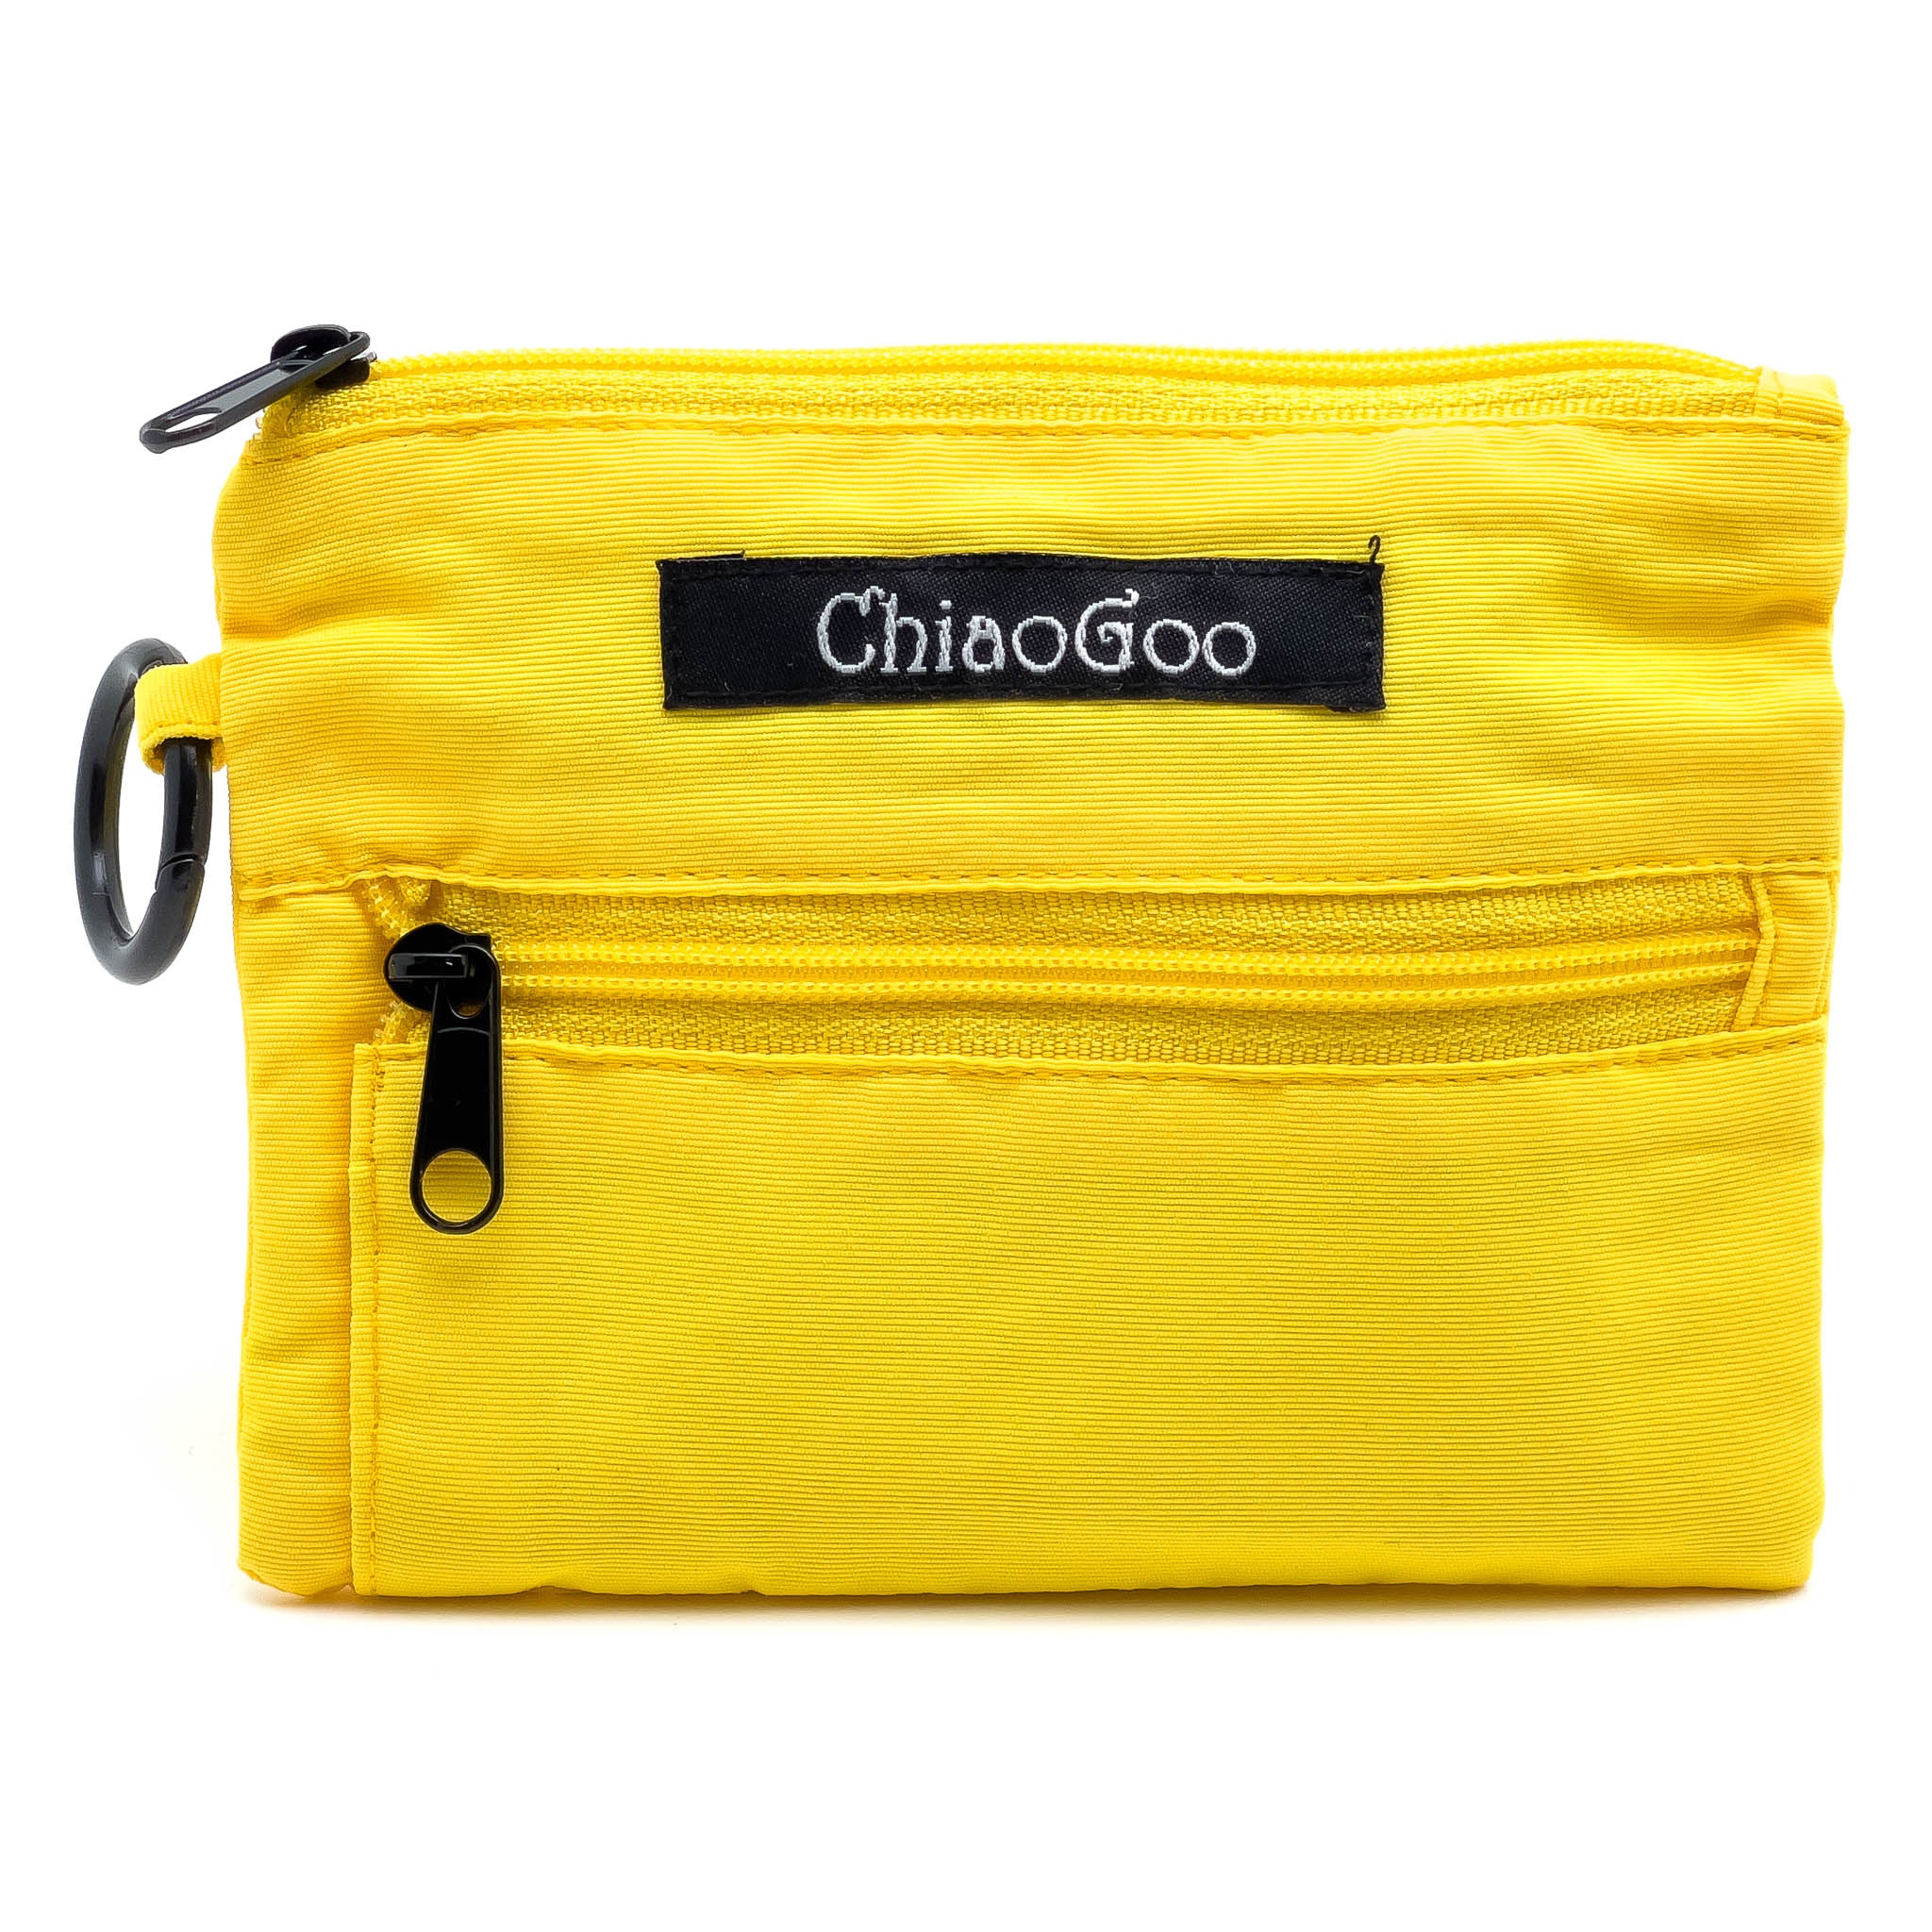 ChiaoGoo TWIST 3-Inch Shorties Yellow Set US-9 - US-11 Stainless Steel Interchangeable Knitting Needles